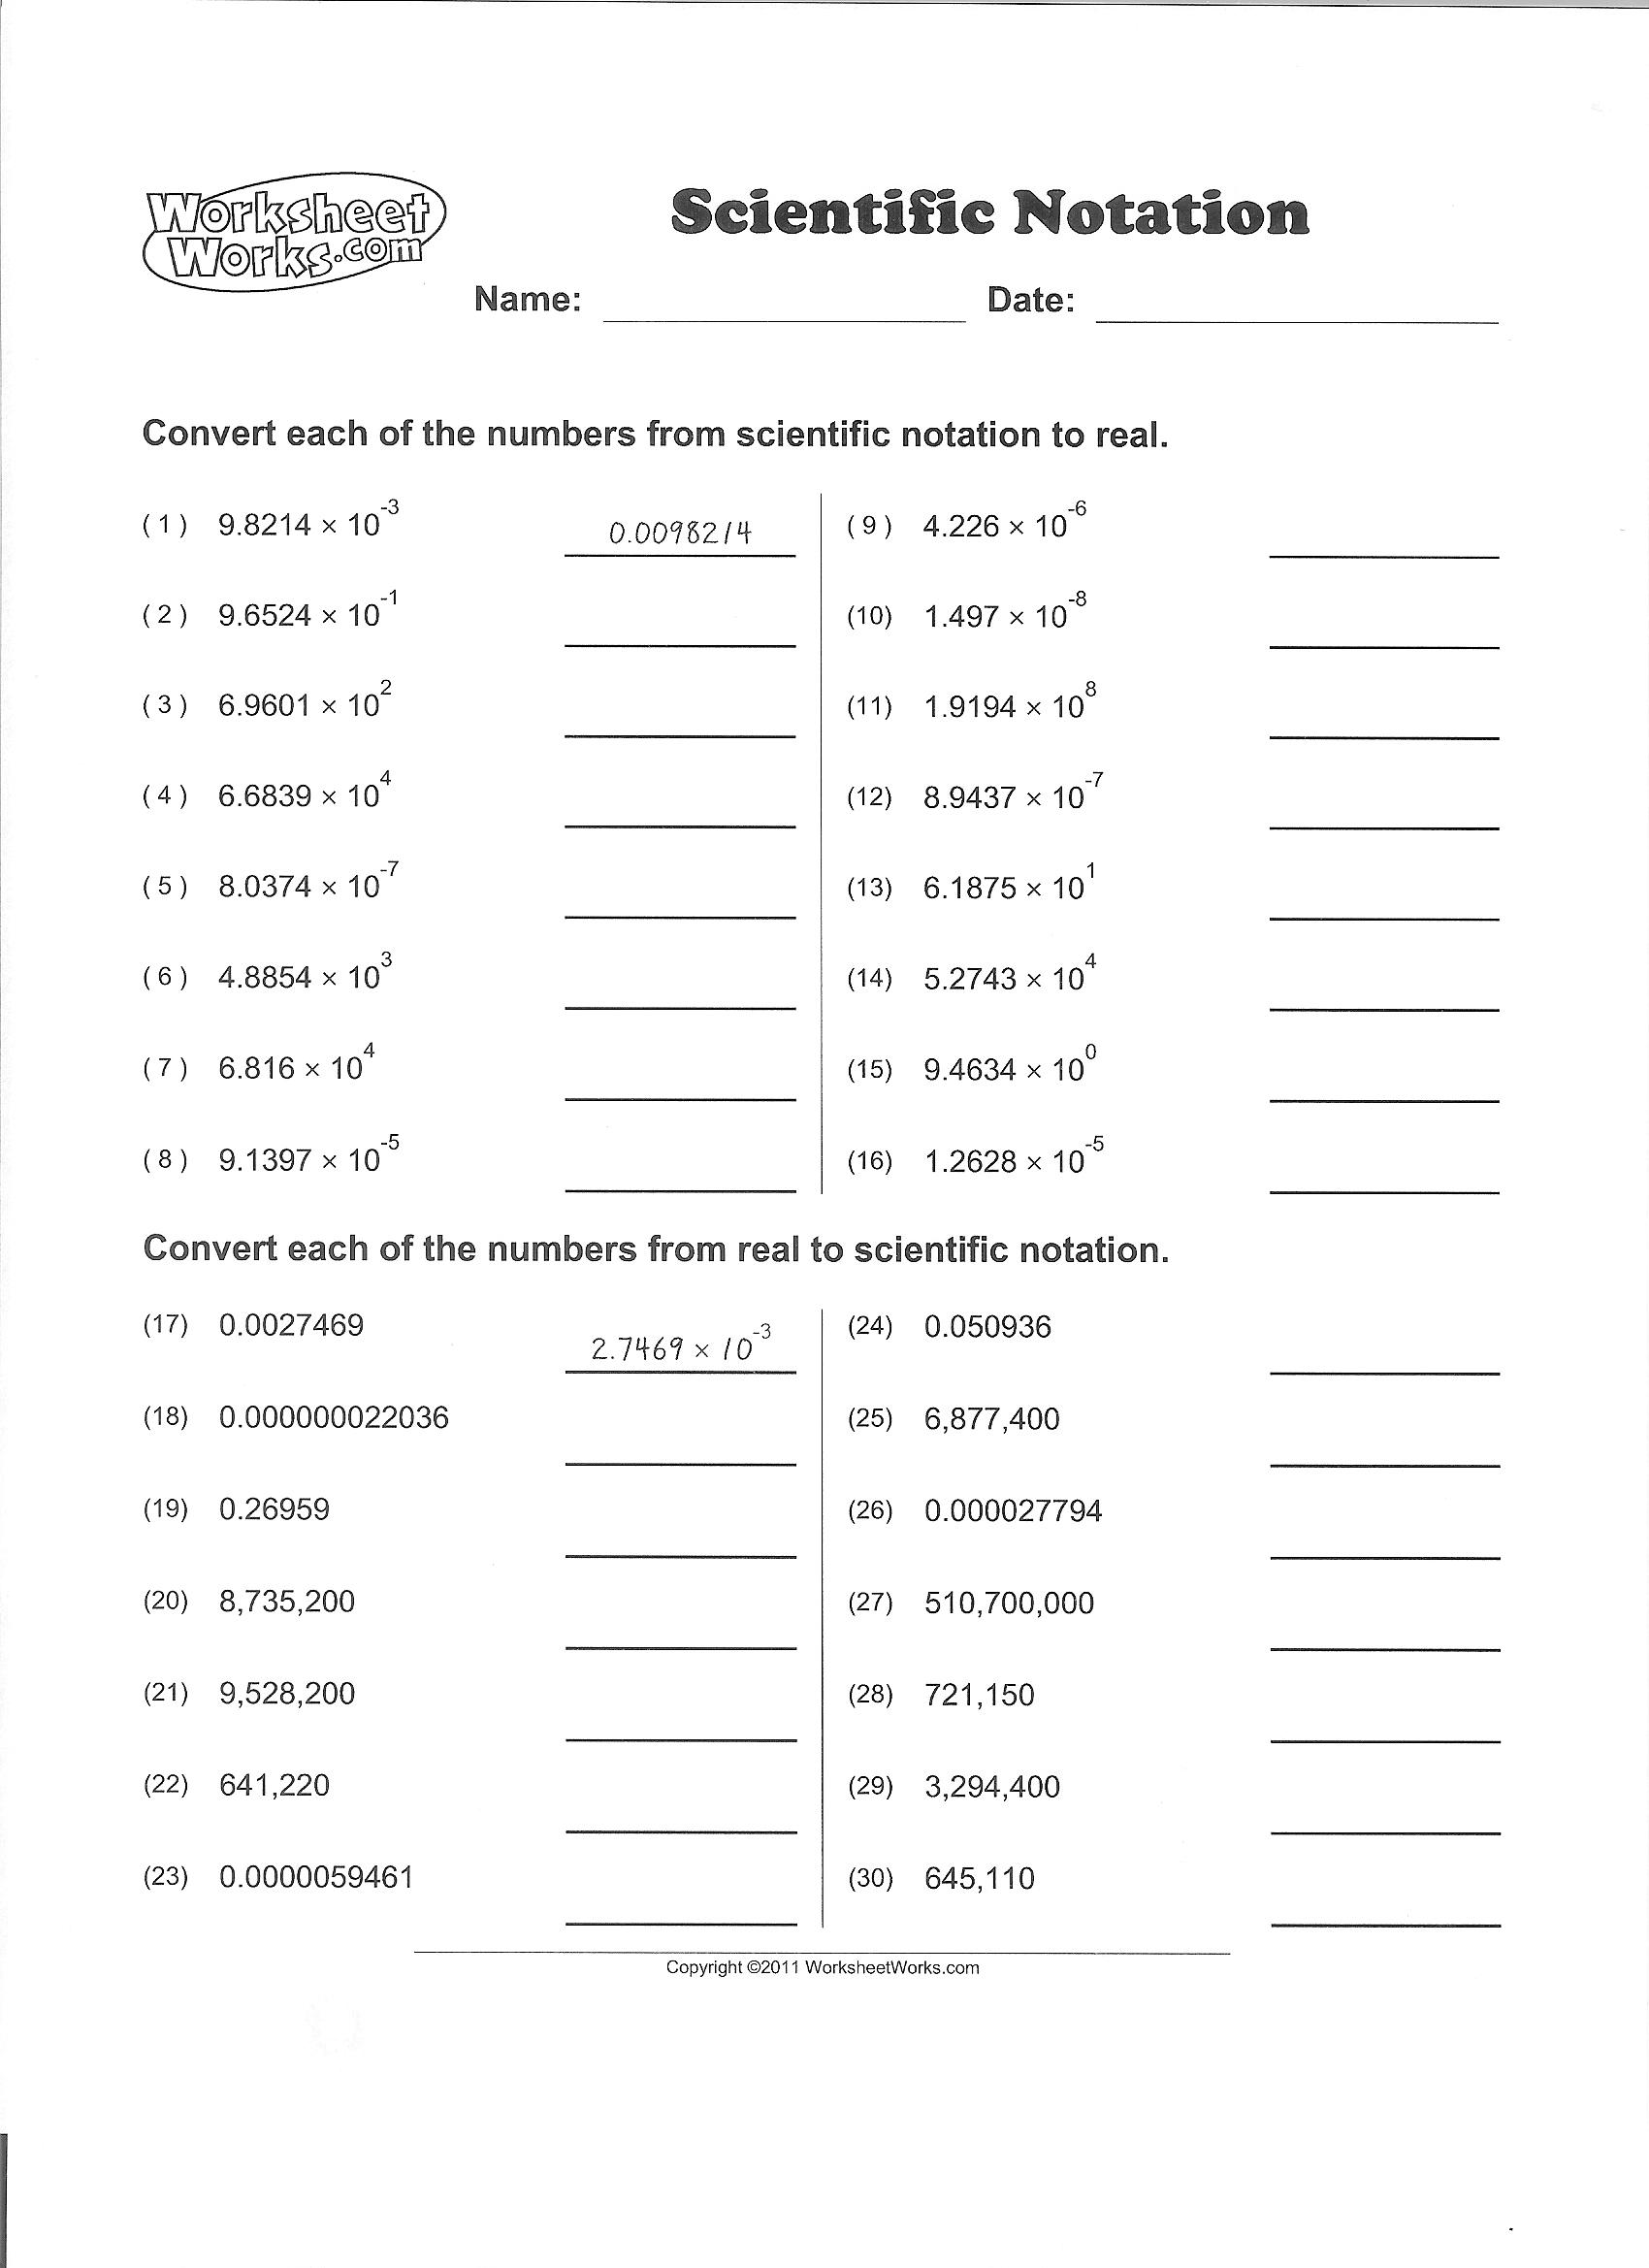 Scientific Notation Worksheet Image